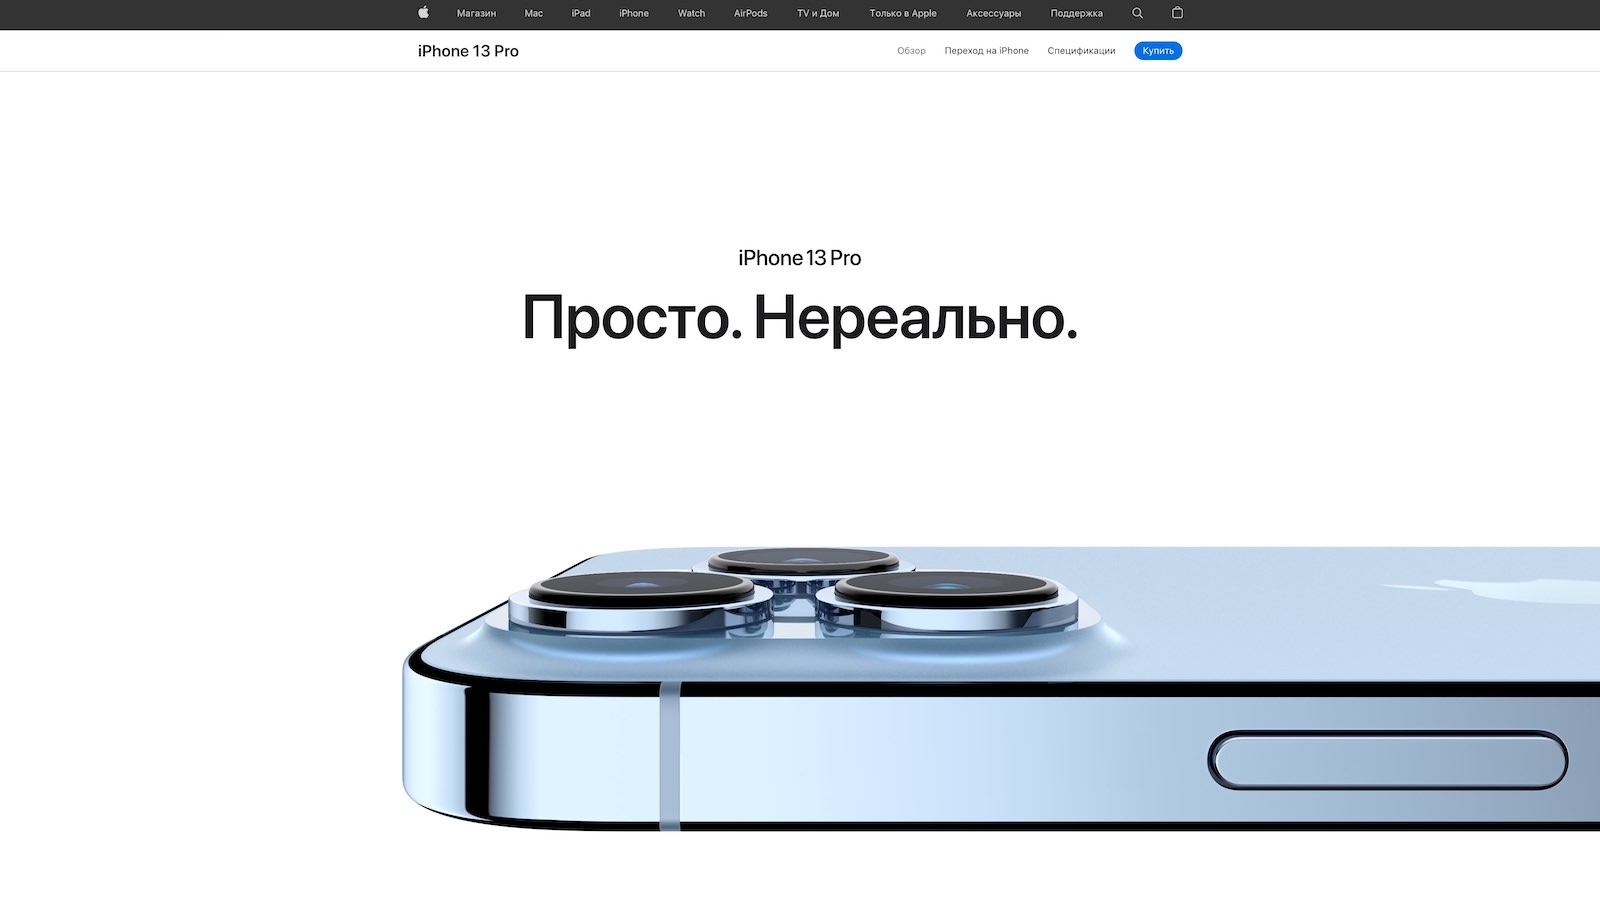 Apple Russia